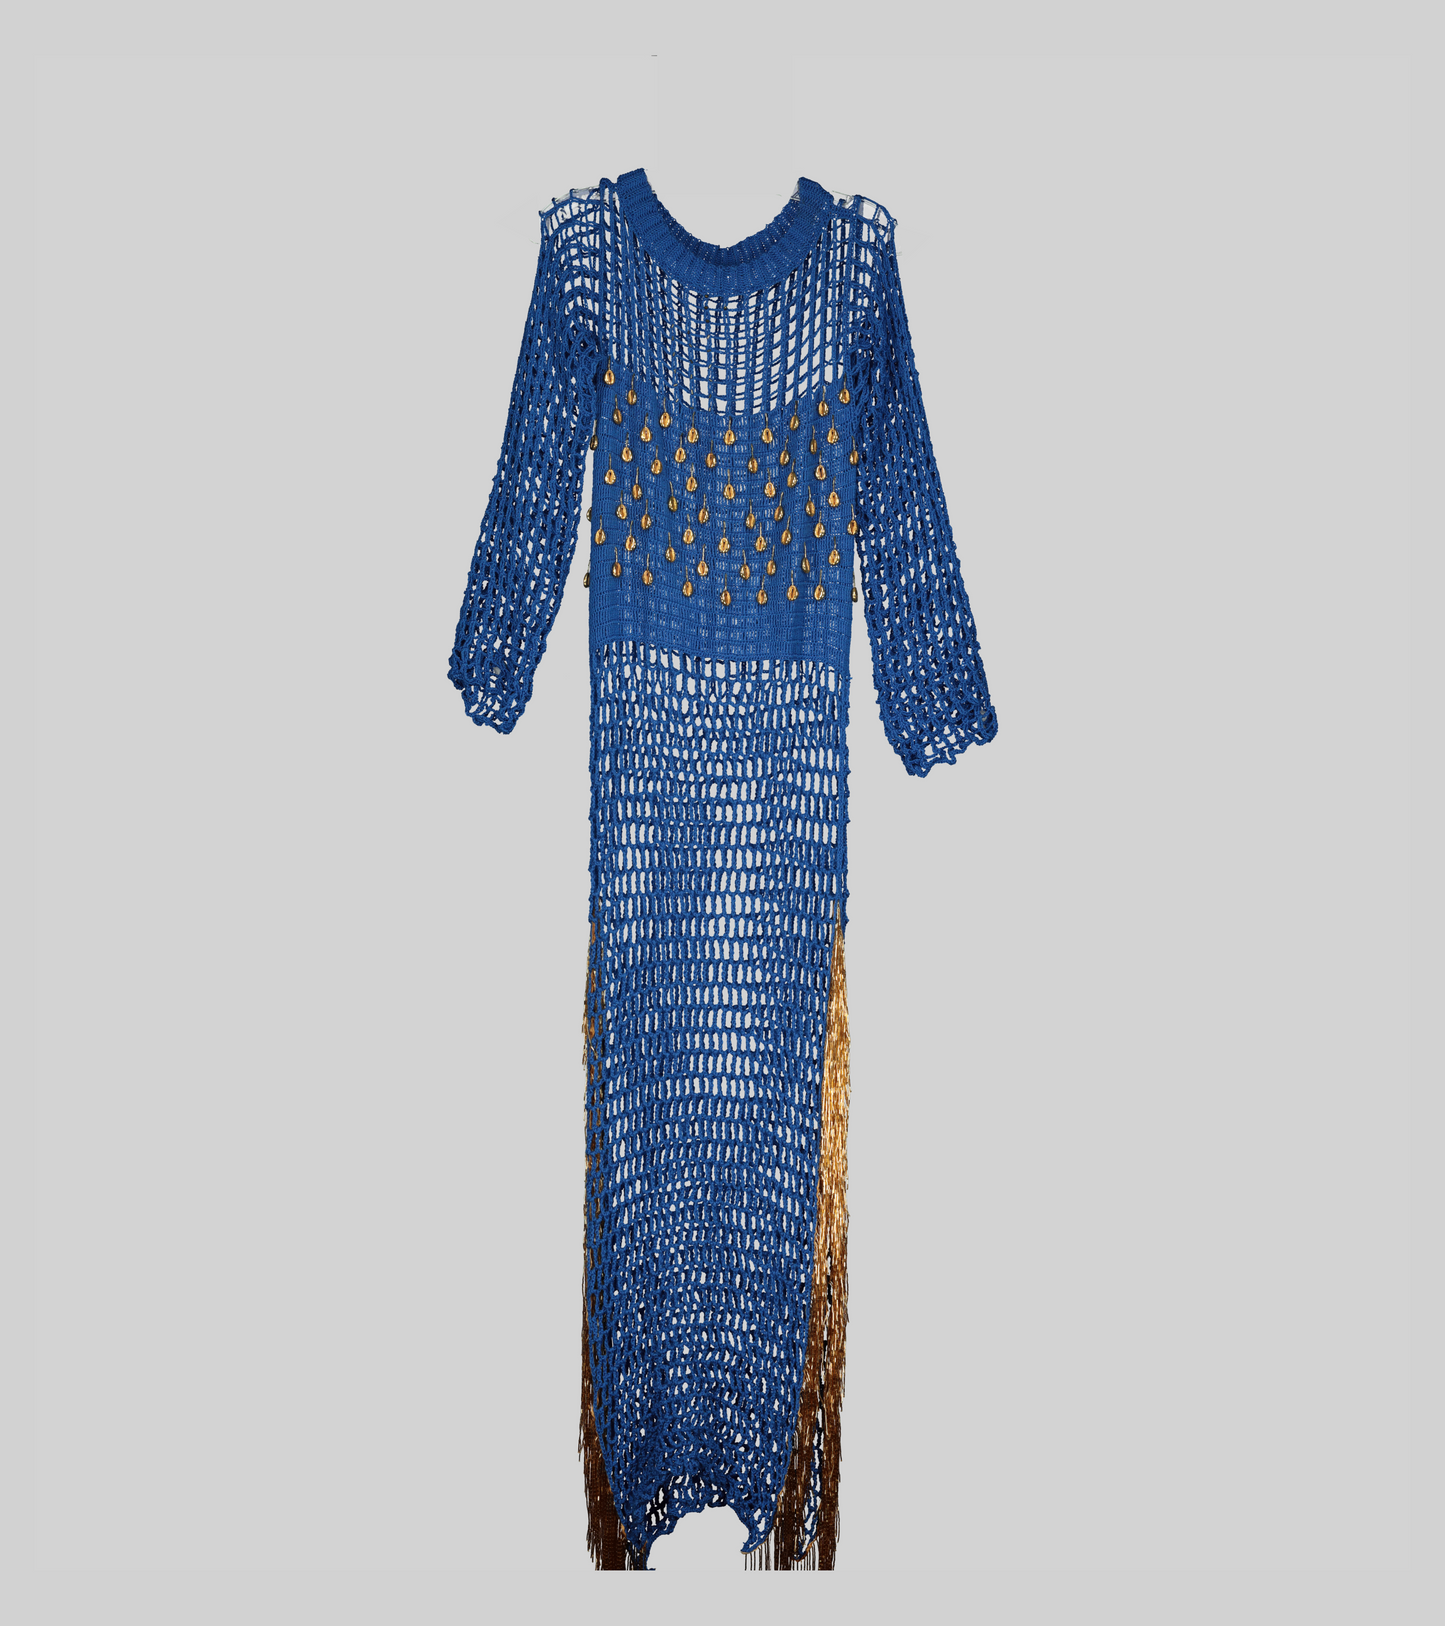 Alia Bare Mykonos Crotchet Dress with Slip Small Blue & Gold